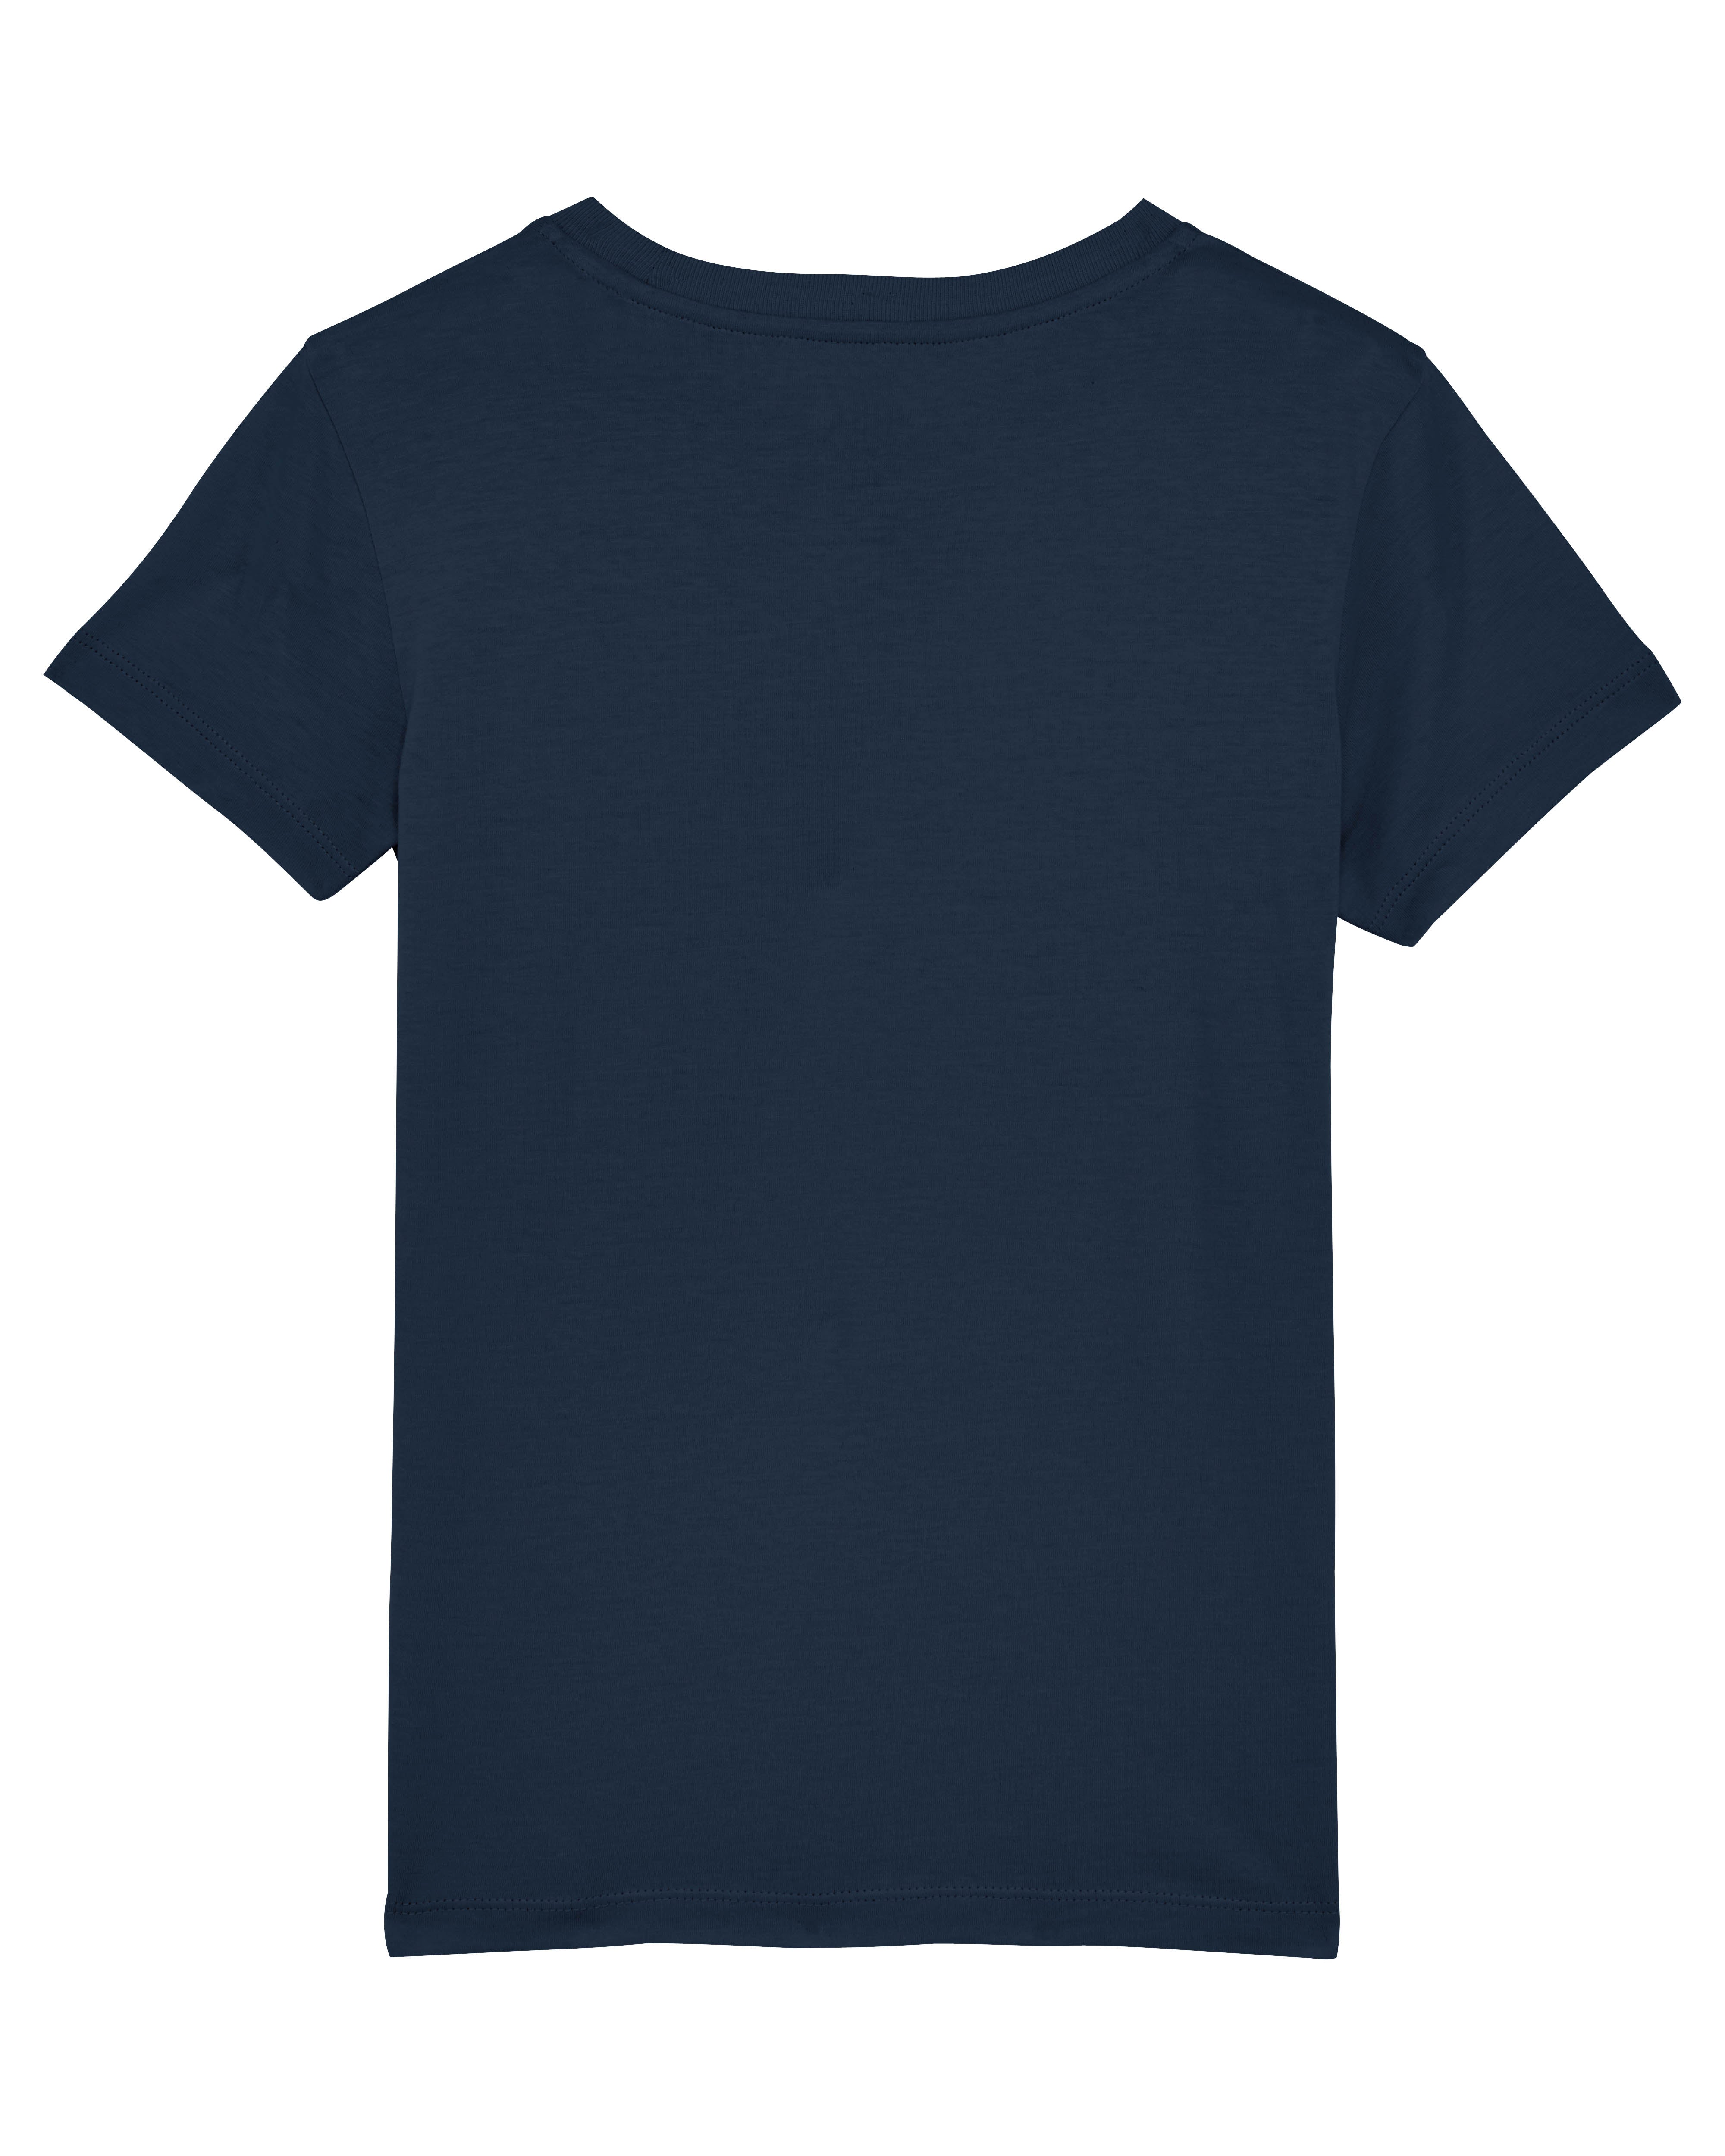 T-Shirt Enfant Poisson Dieppois Bleu Marine